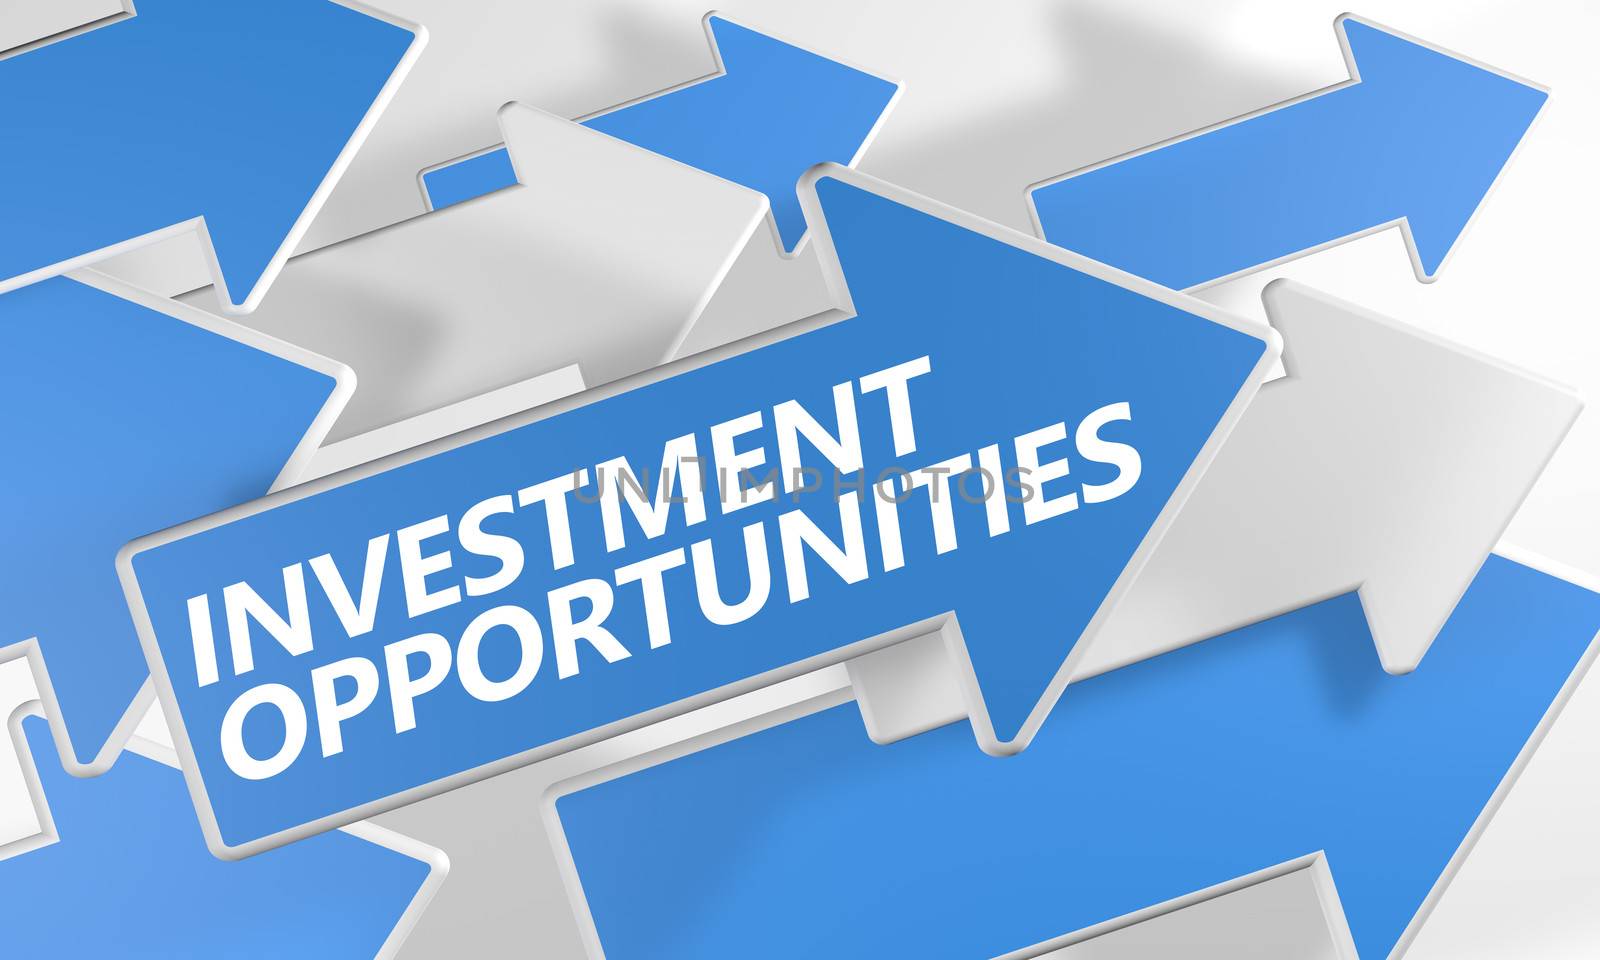 Investment opportunities by Mazirama